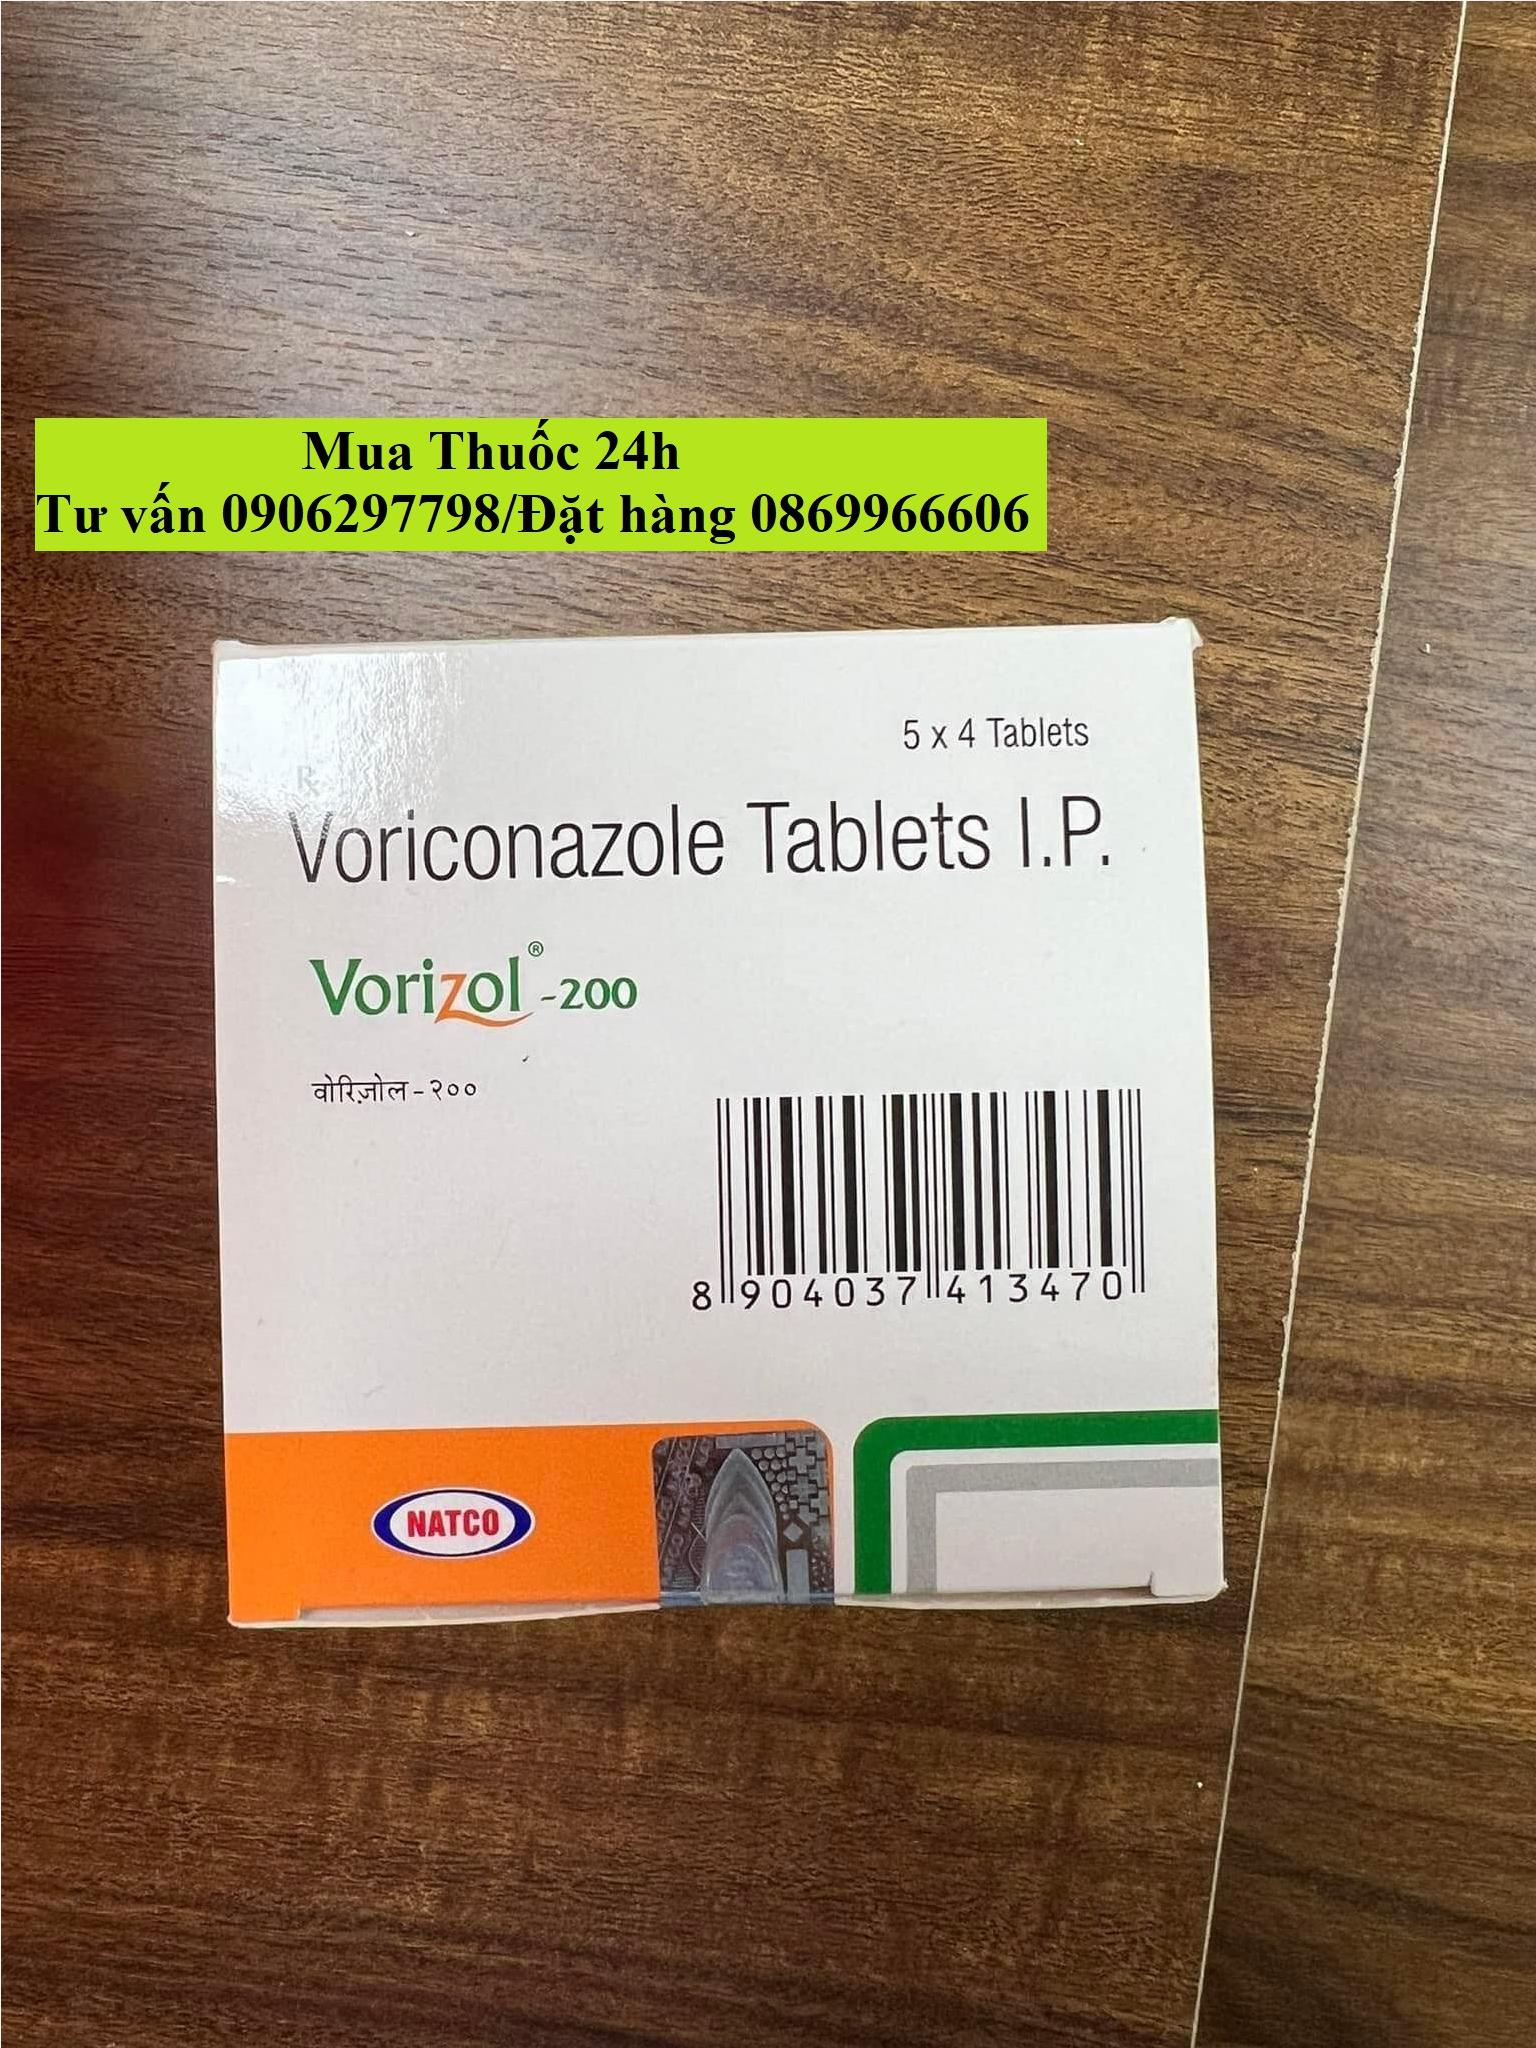 Thuốc Vorizol-200 Voriconazole 200mg giá bao nhiêu mua ở đâu?